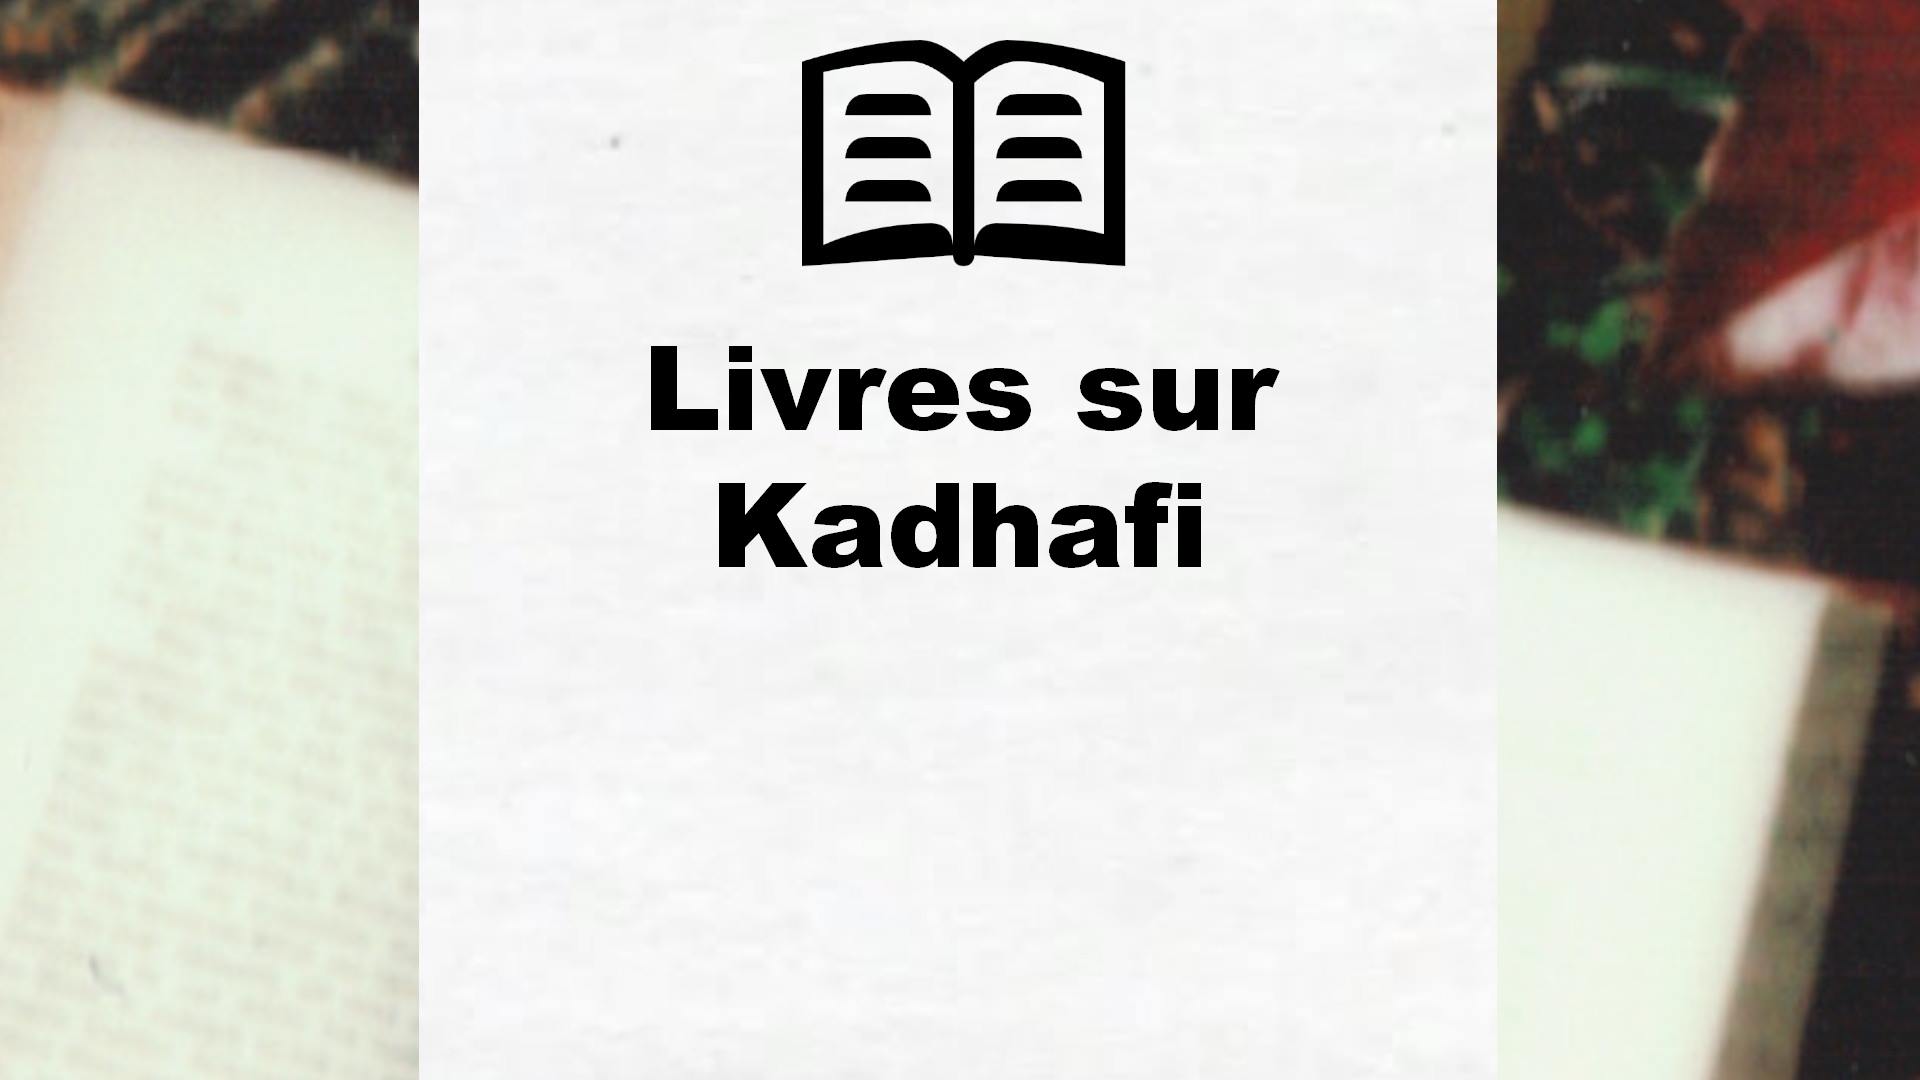 Livres sur Kadhafi